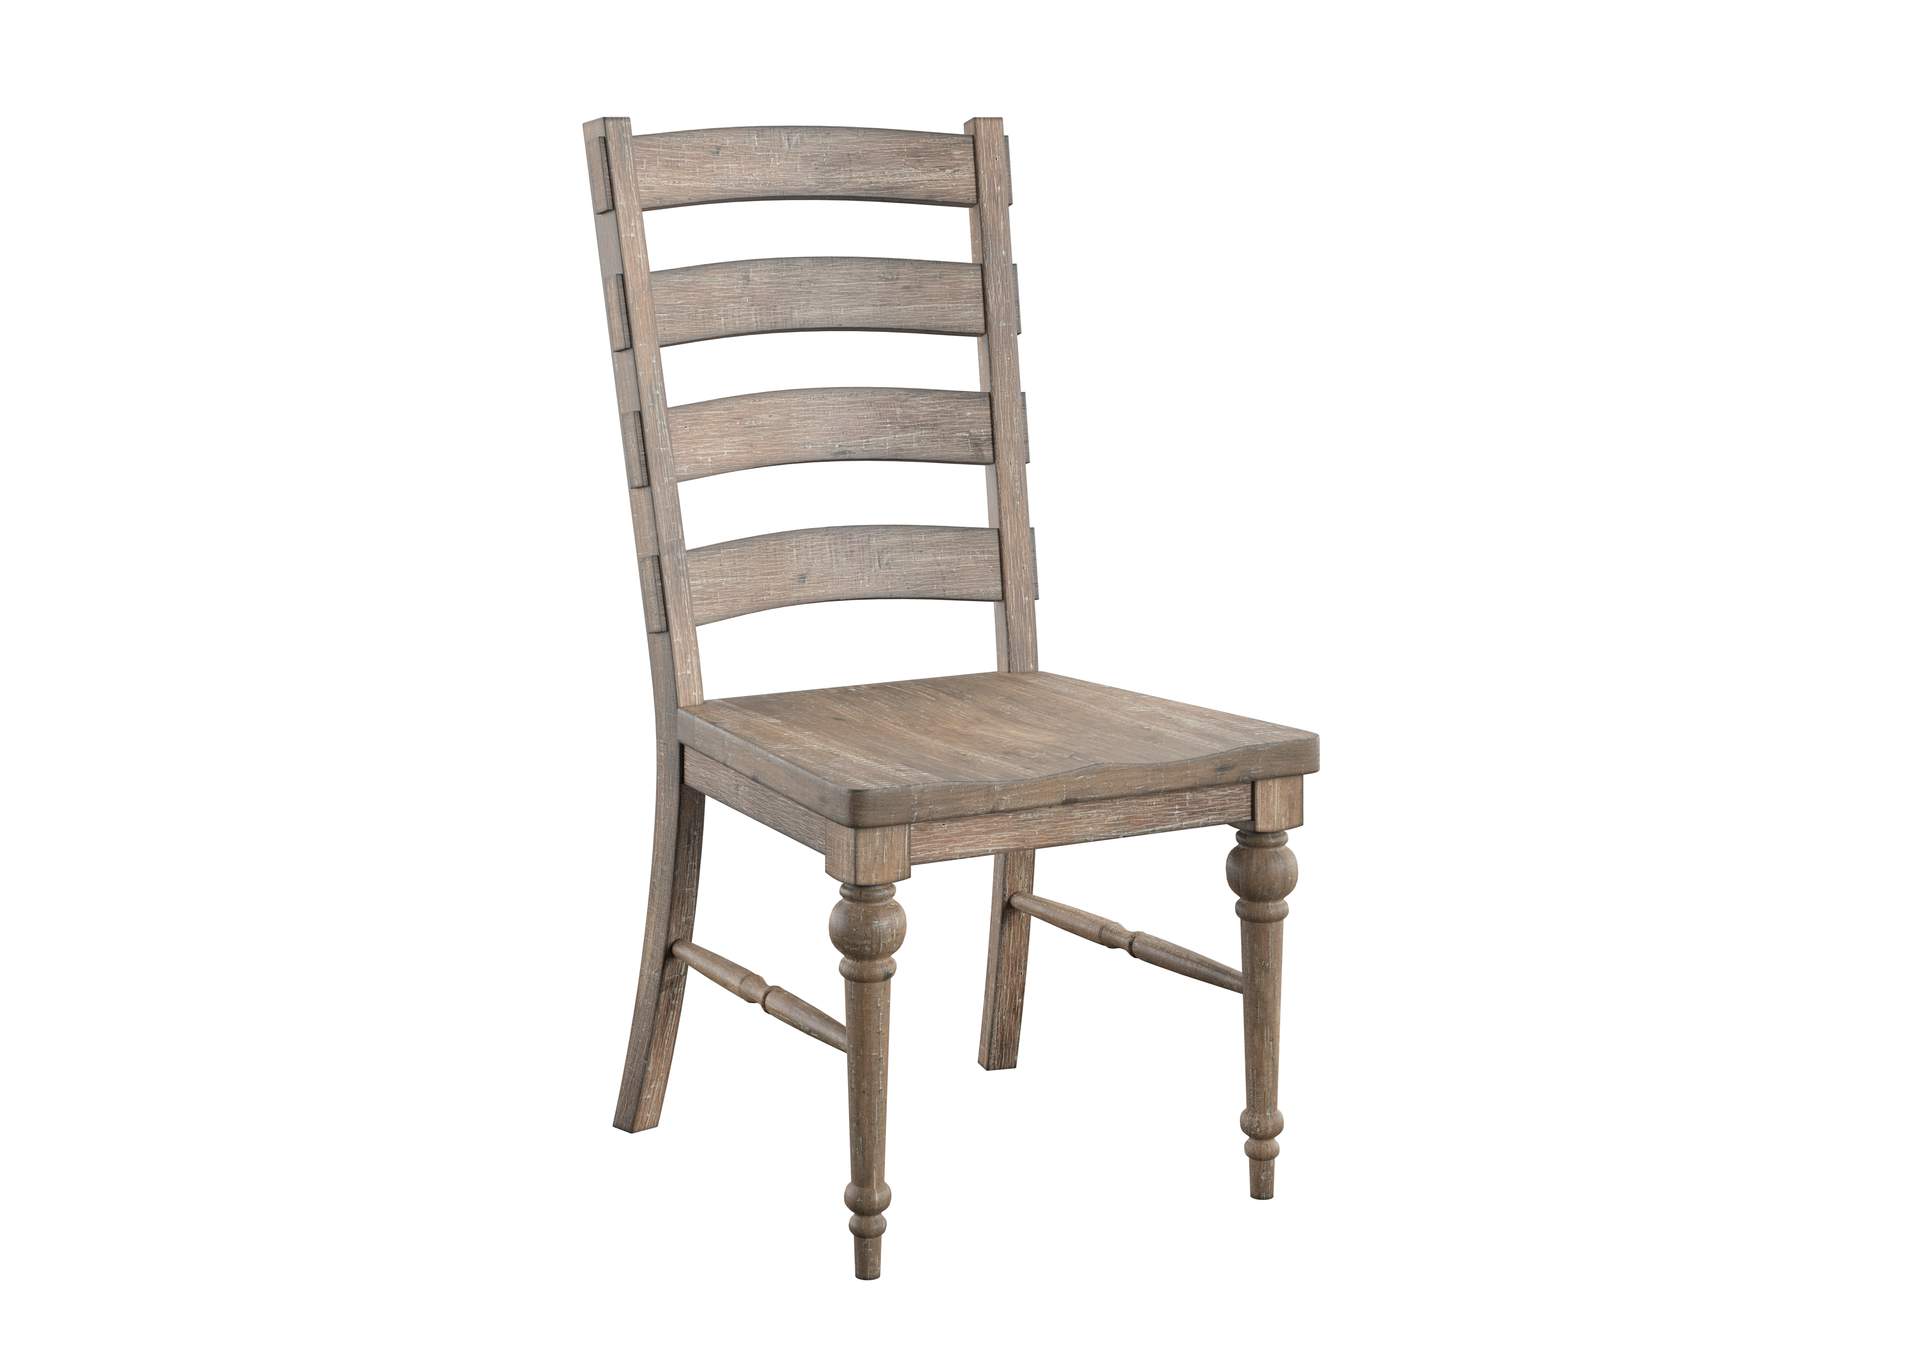 Interlude Ladderback Dining Chair,Emerald Home Furnishings